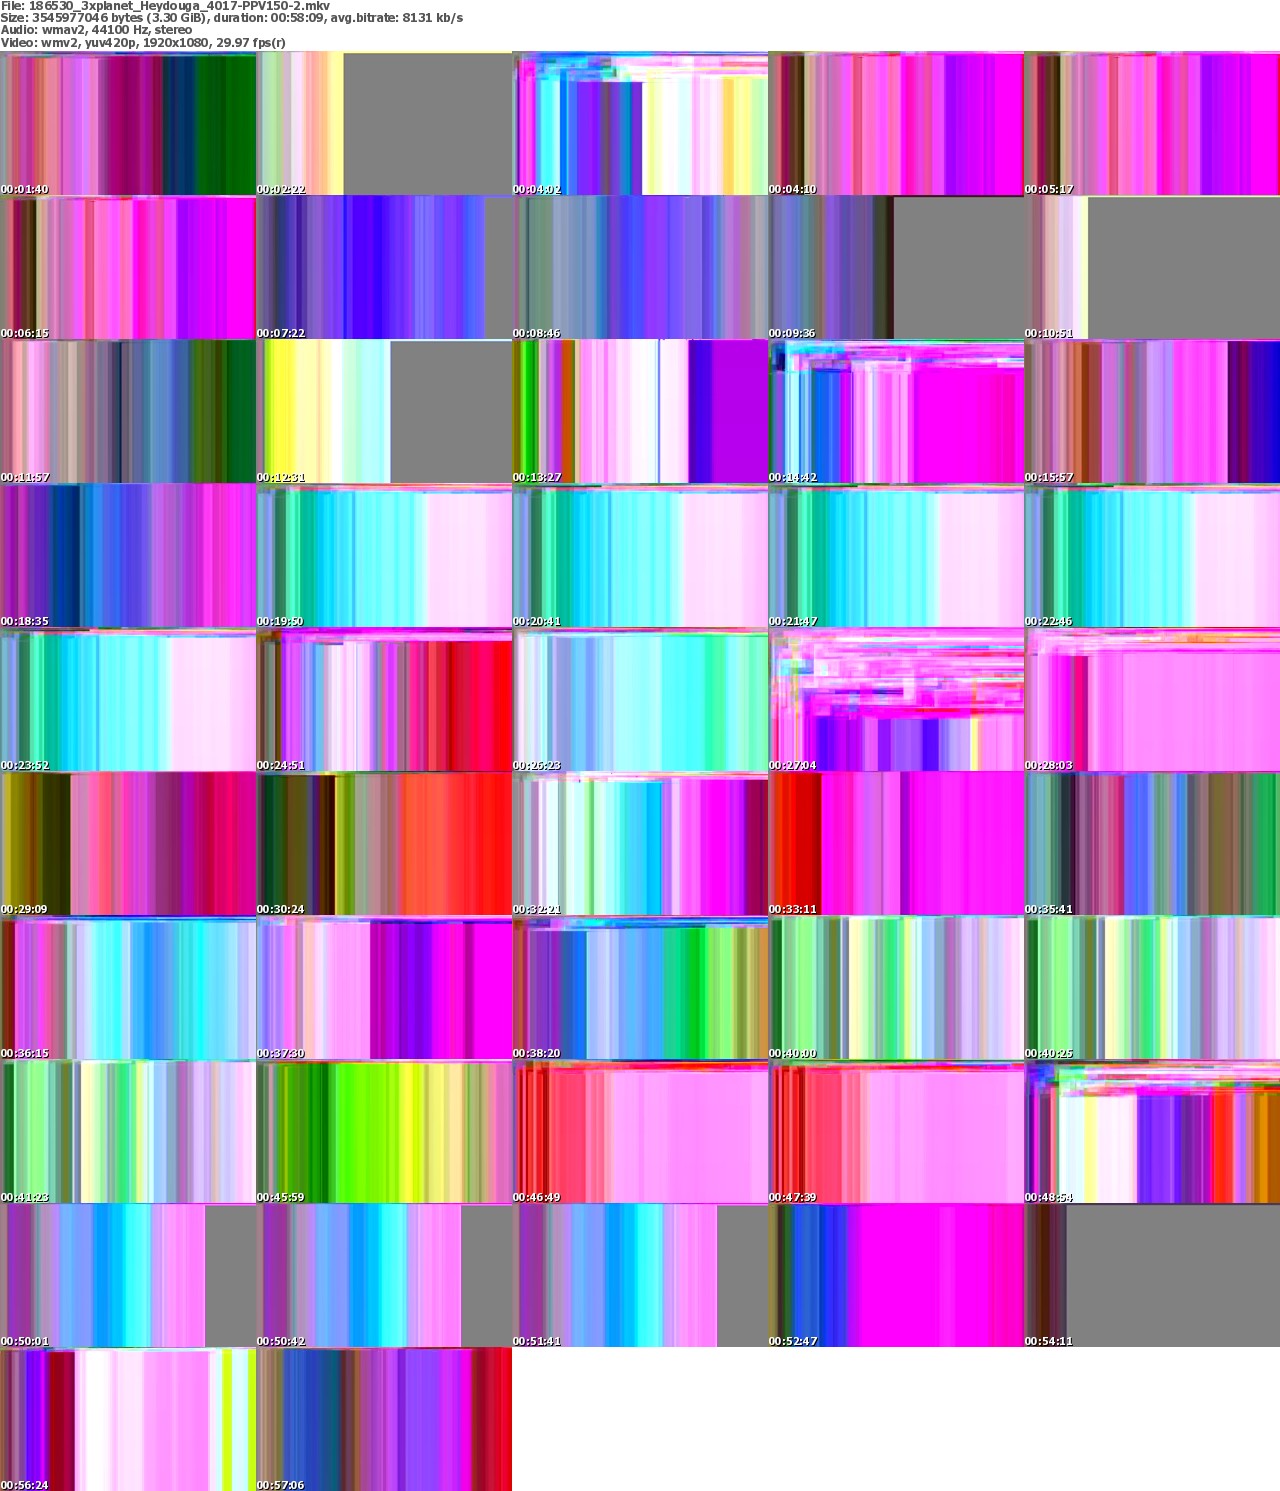 Heydouga_4017-PPV150-2 screens previewer